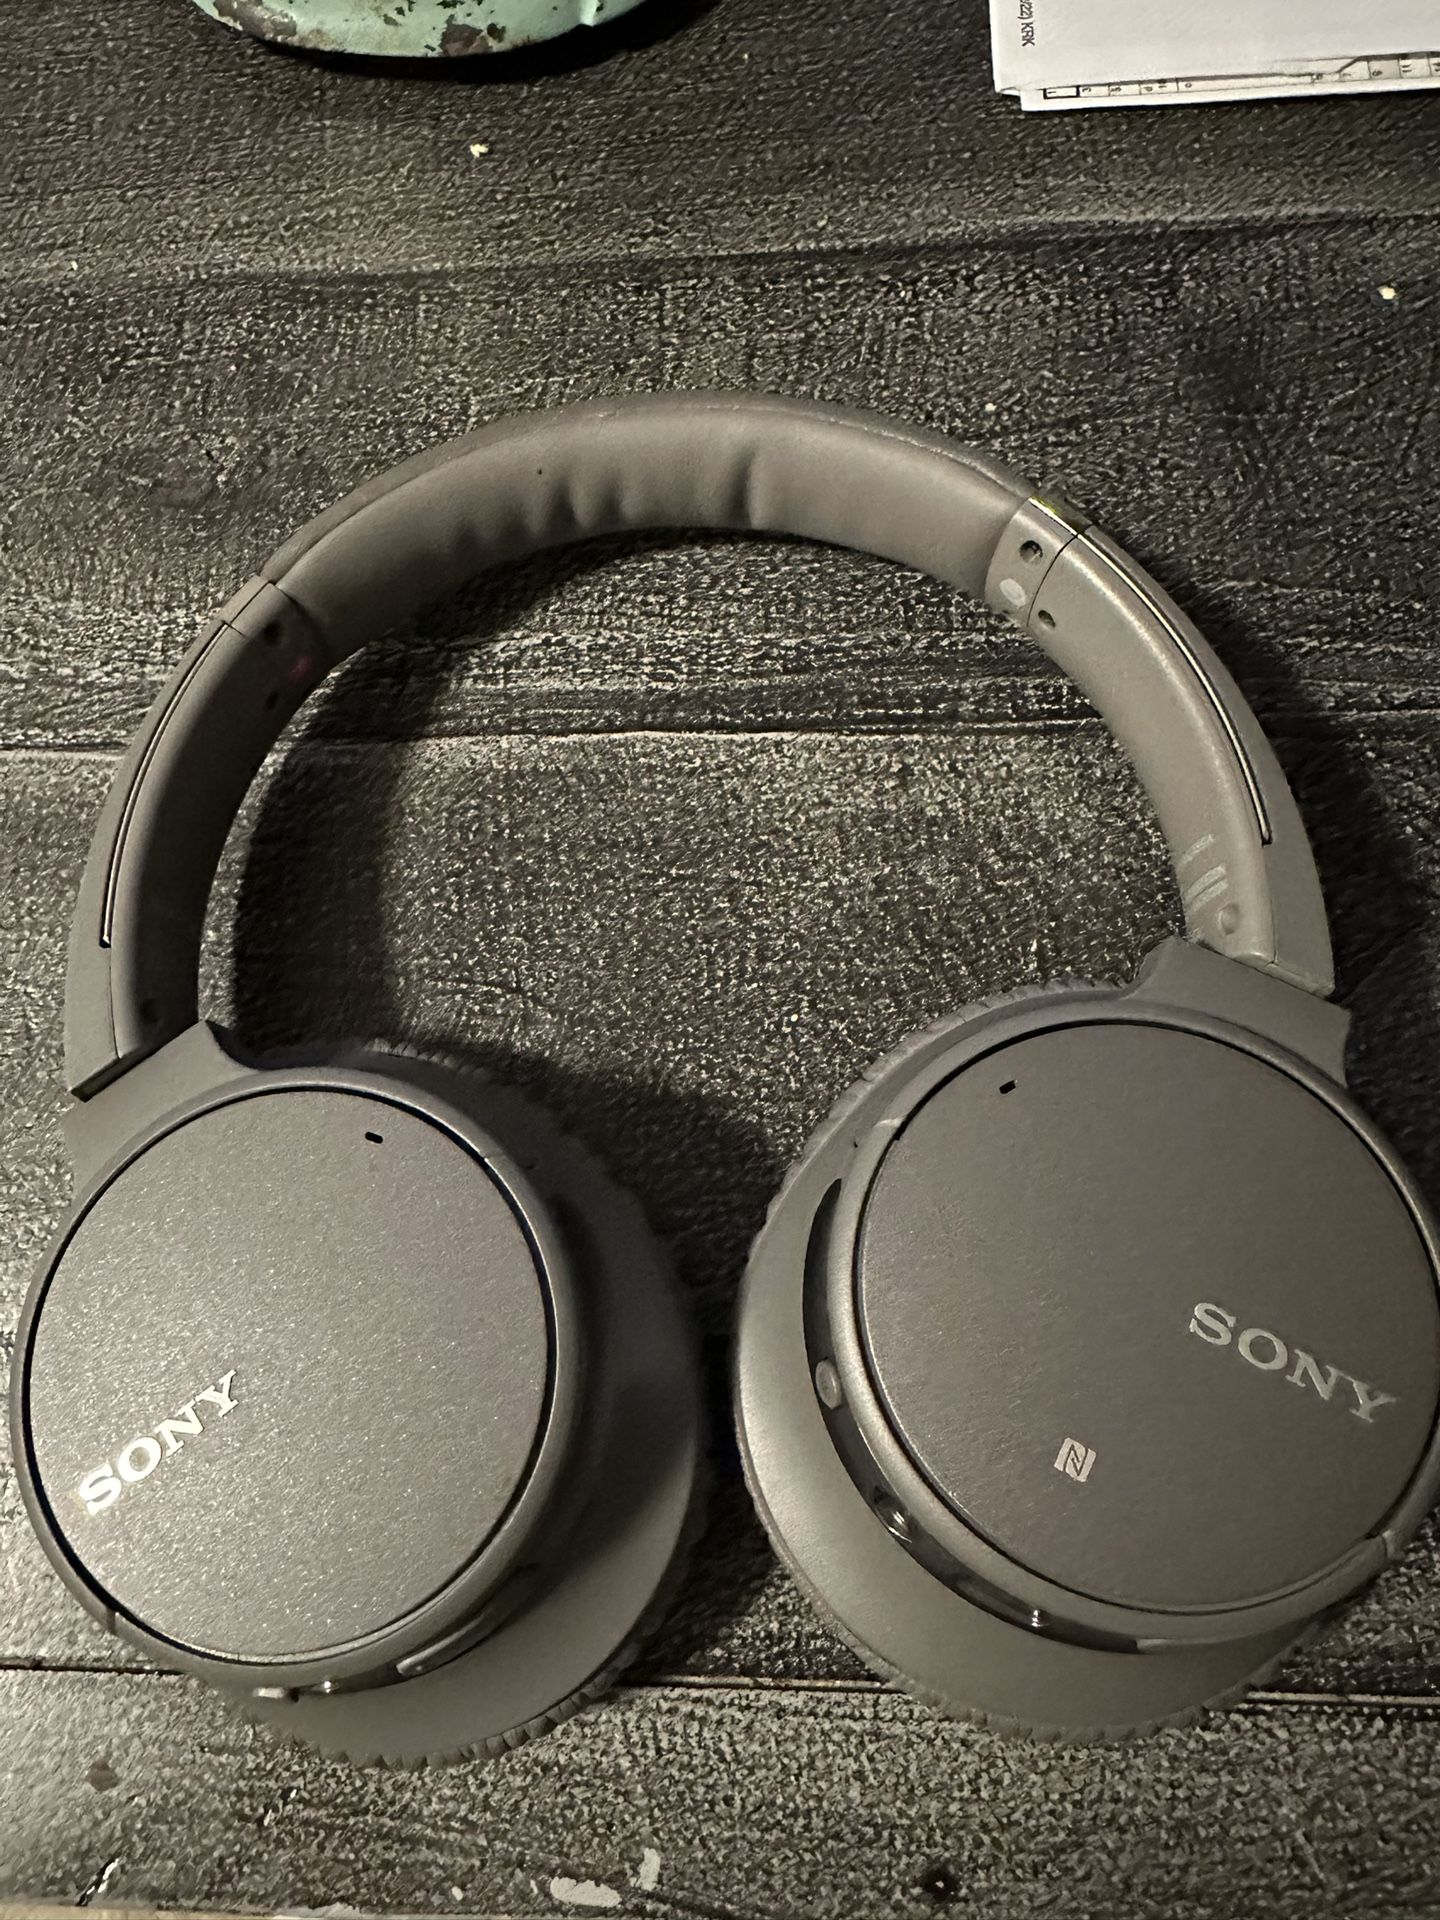 Sony Bluetooth Wireless headphones